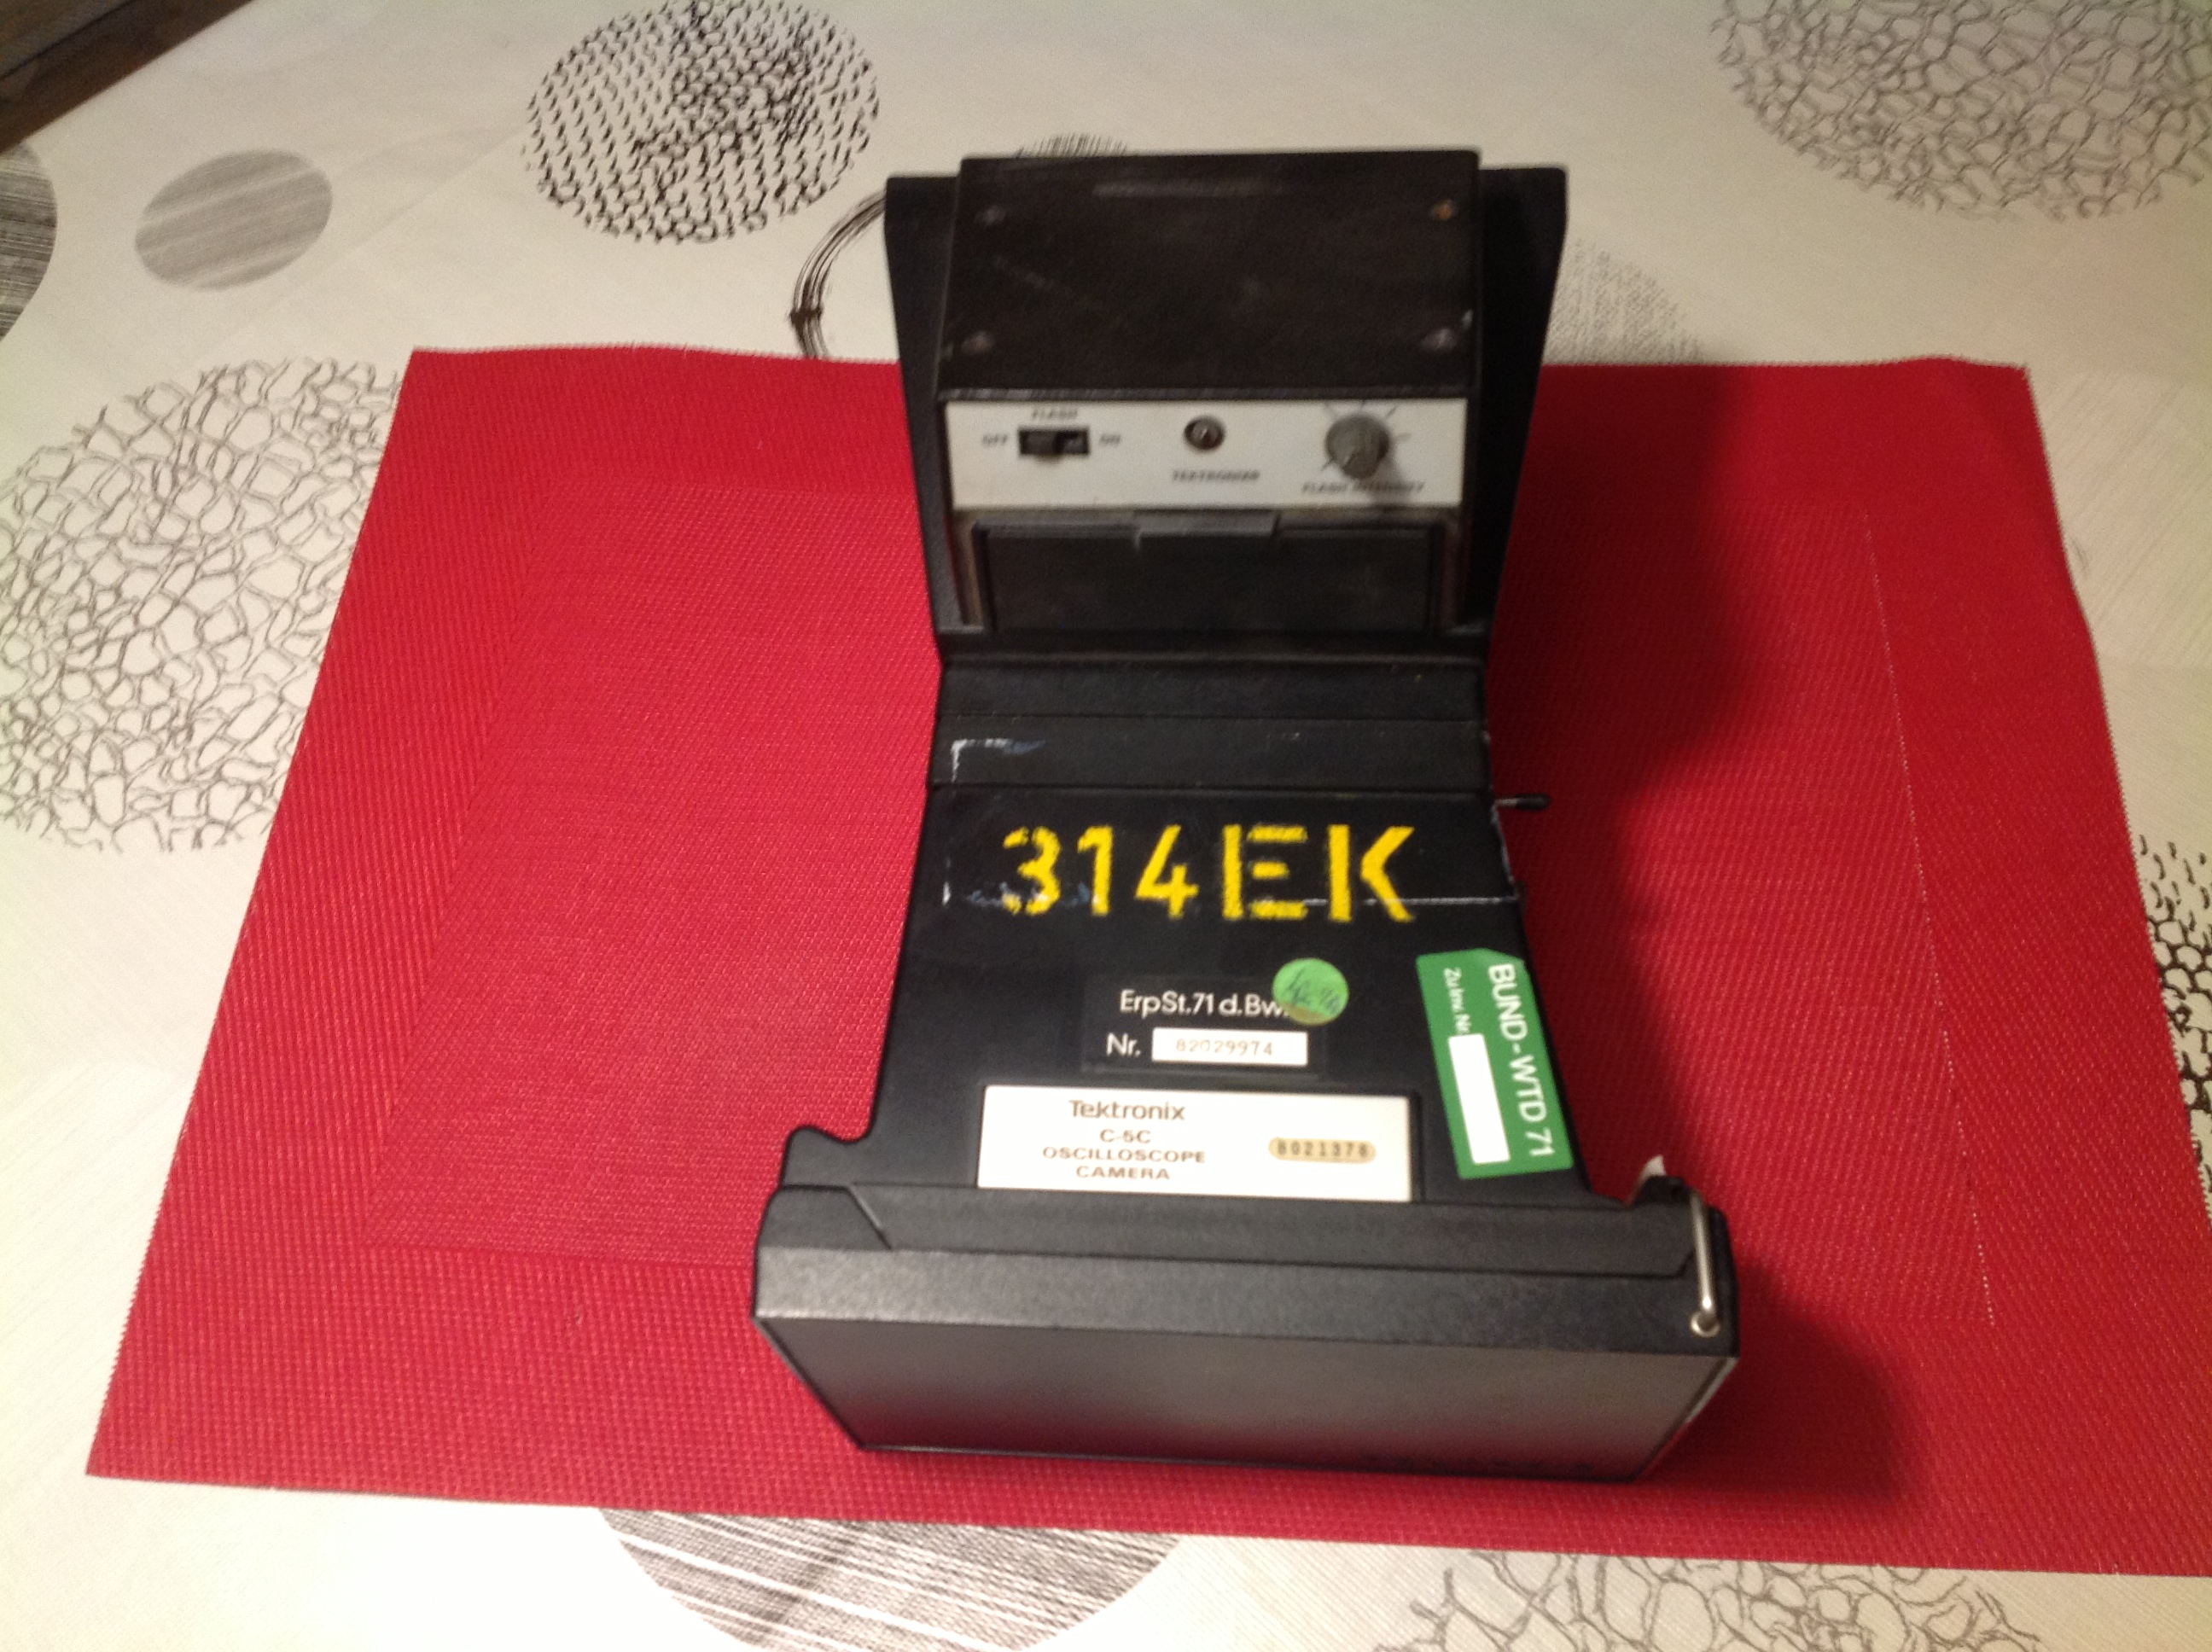 Oscilloscope Camera Tektronix C-5 C mit Polaroid-Rückteil